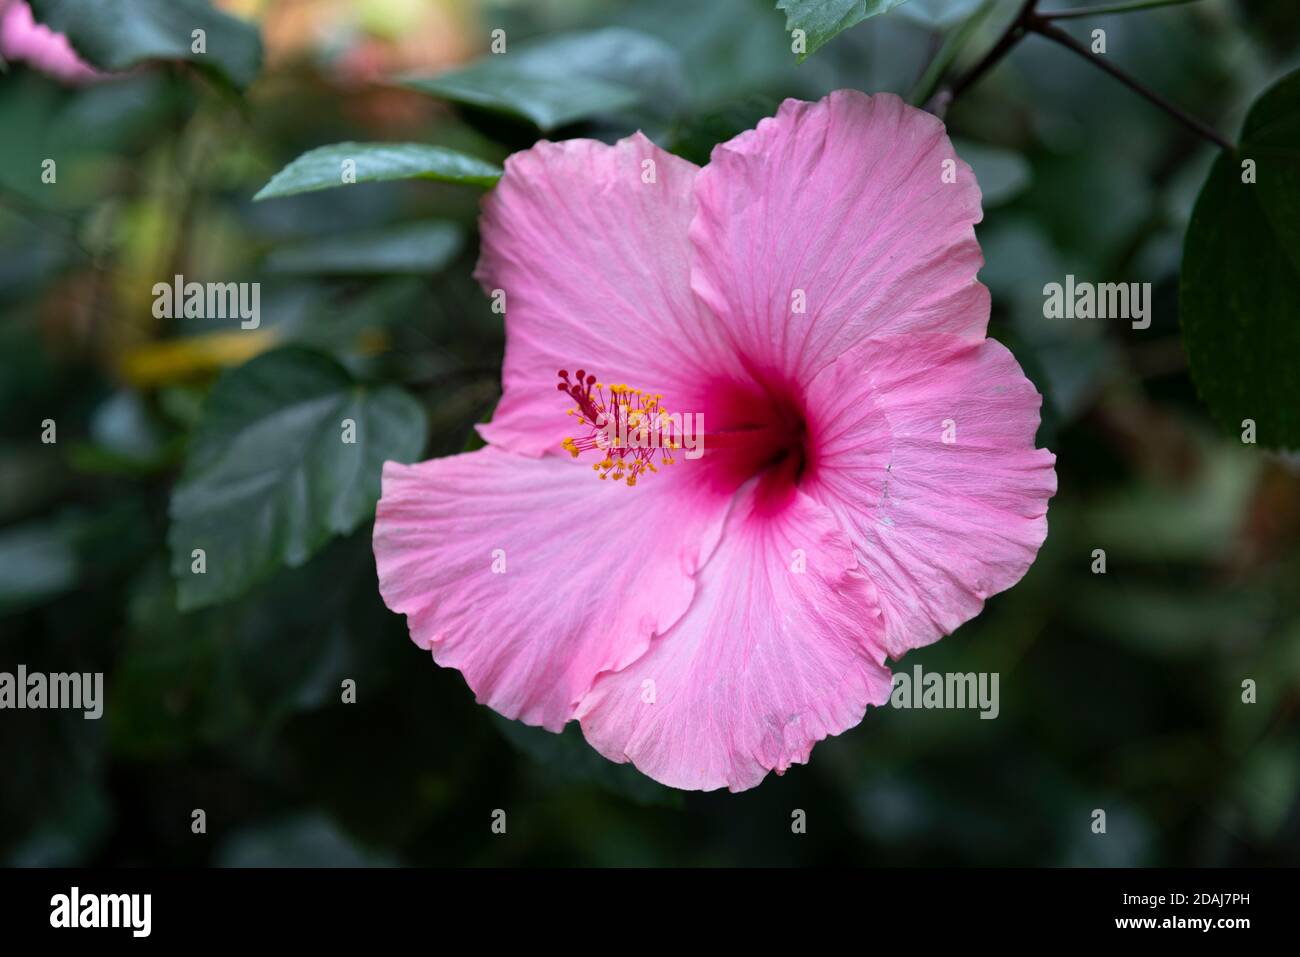 Rosa Hibiskus Blume, Hibiscus rosa-sinensis, Chinesische Hibiskus, China Rose, Hawaiian Hibiscus, rose Mallow, shoeblackplant Stockfoto